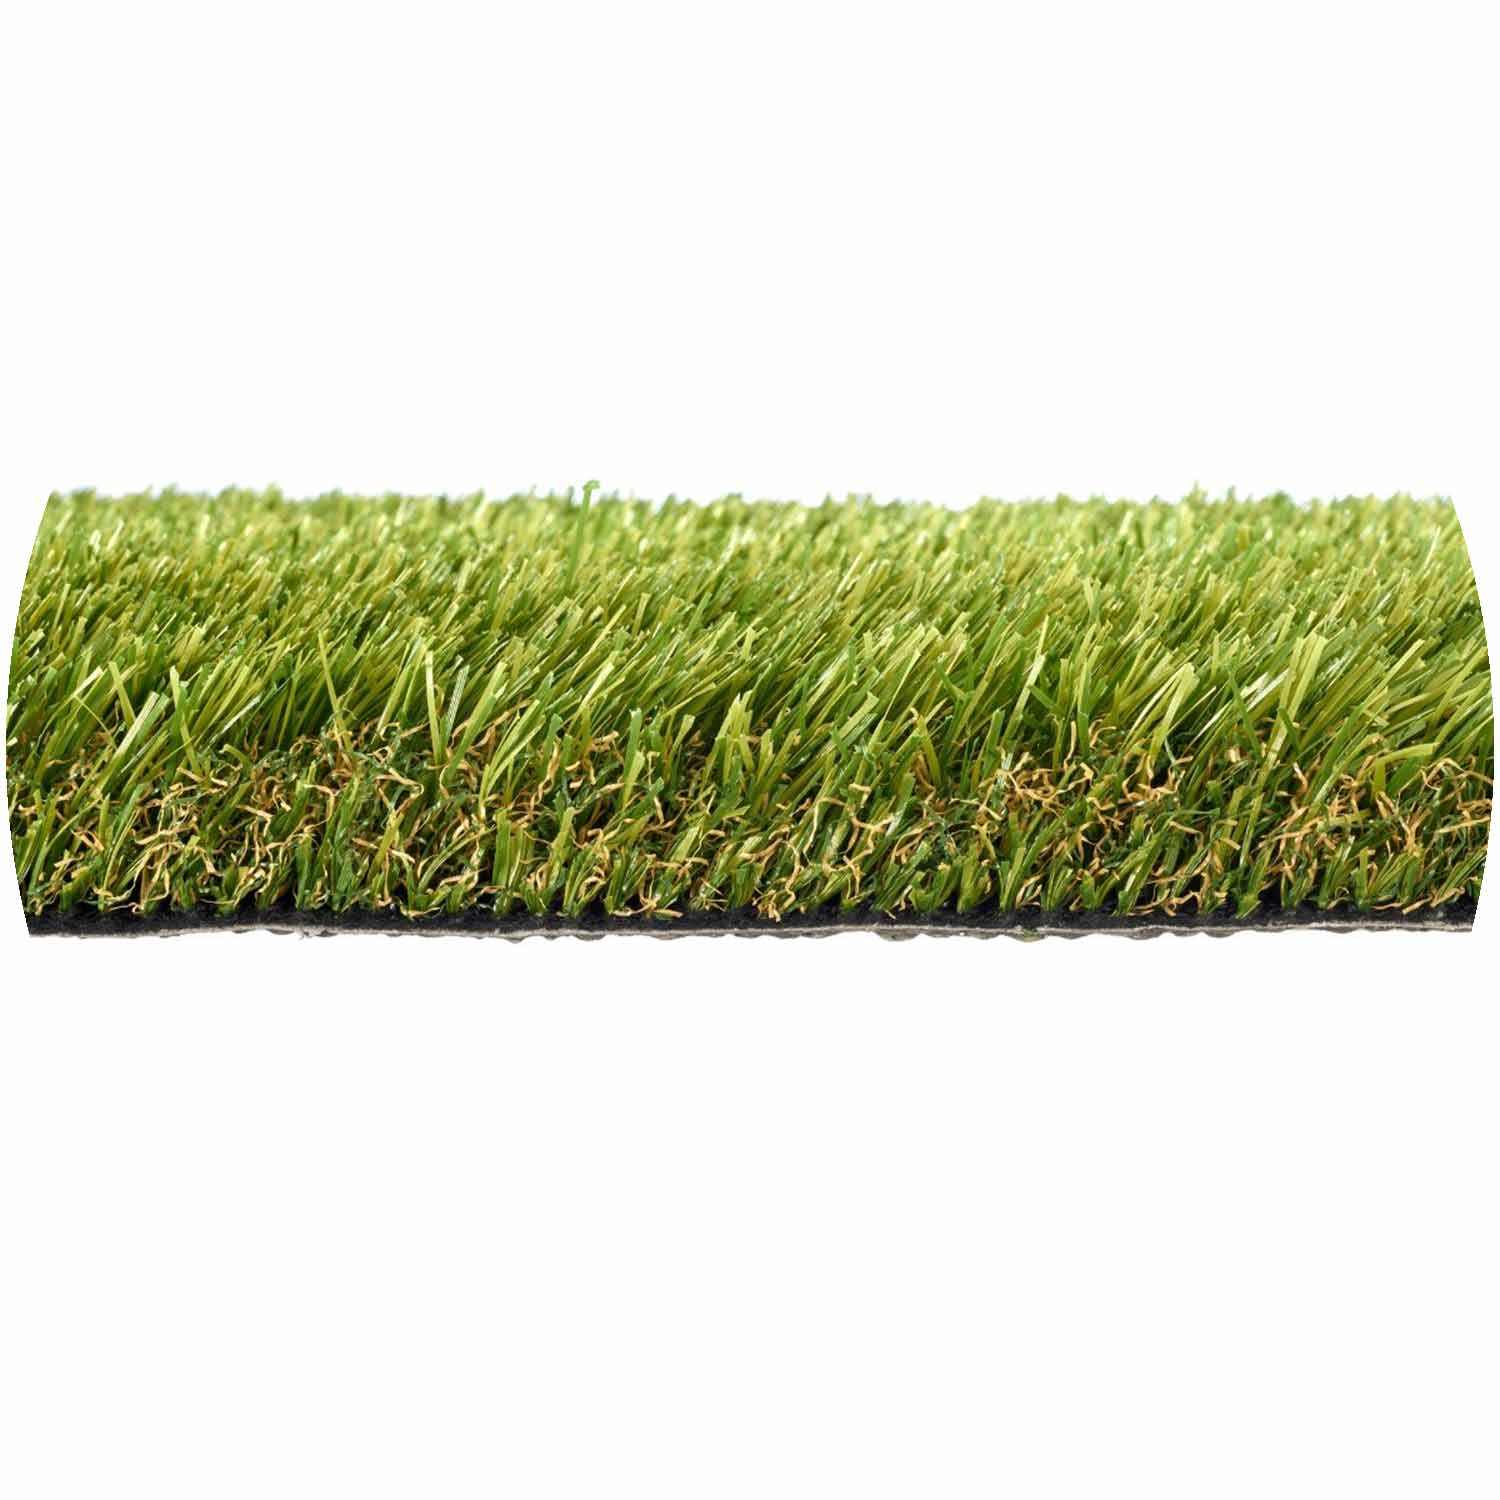 Diablo 35mm Pile Artificial Grass per mtr